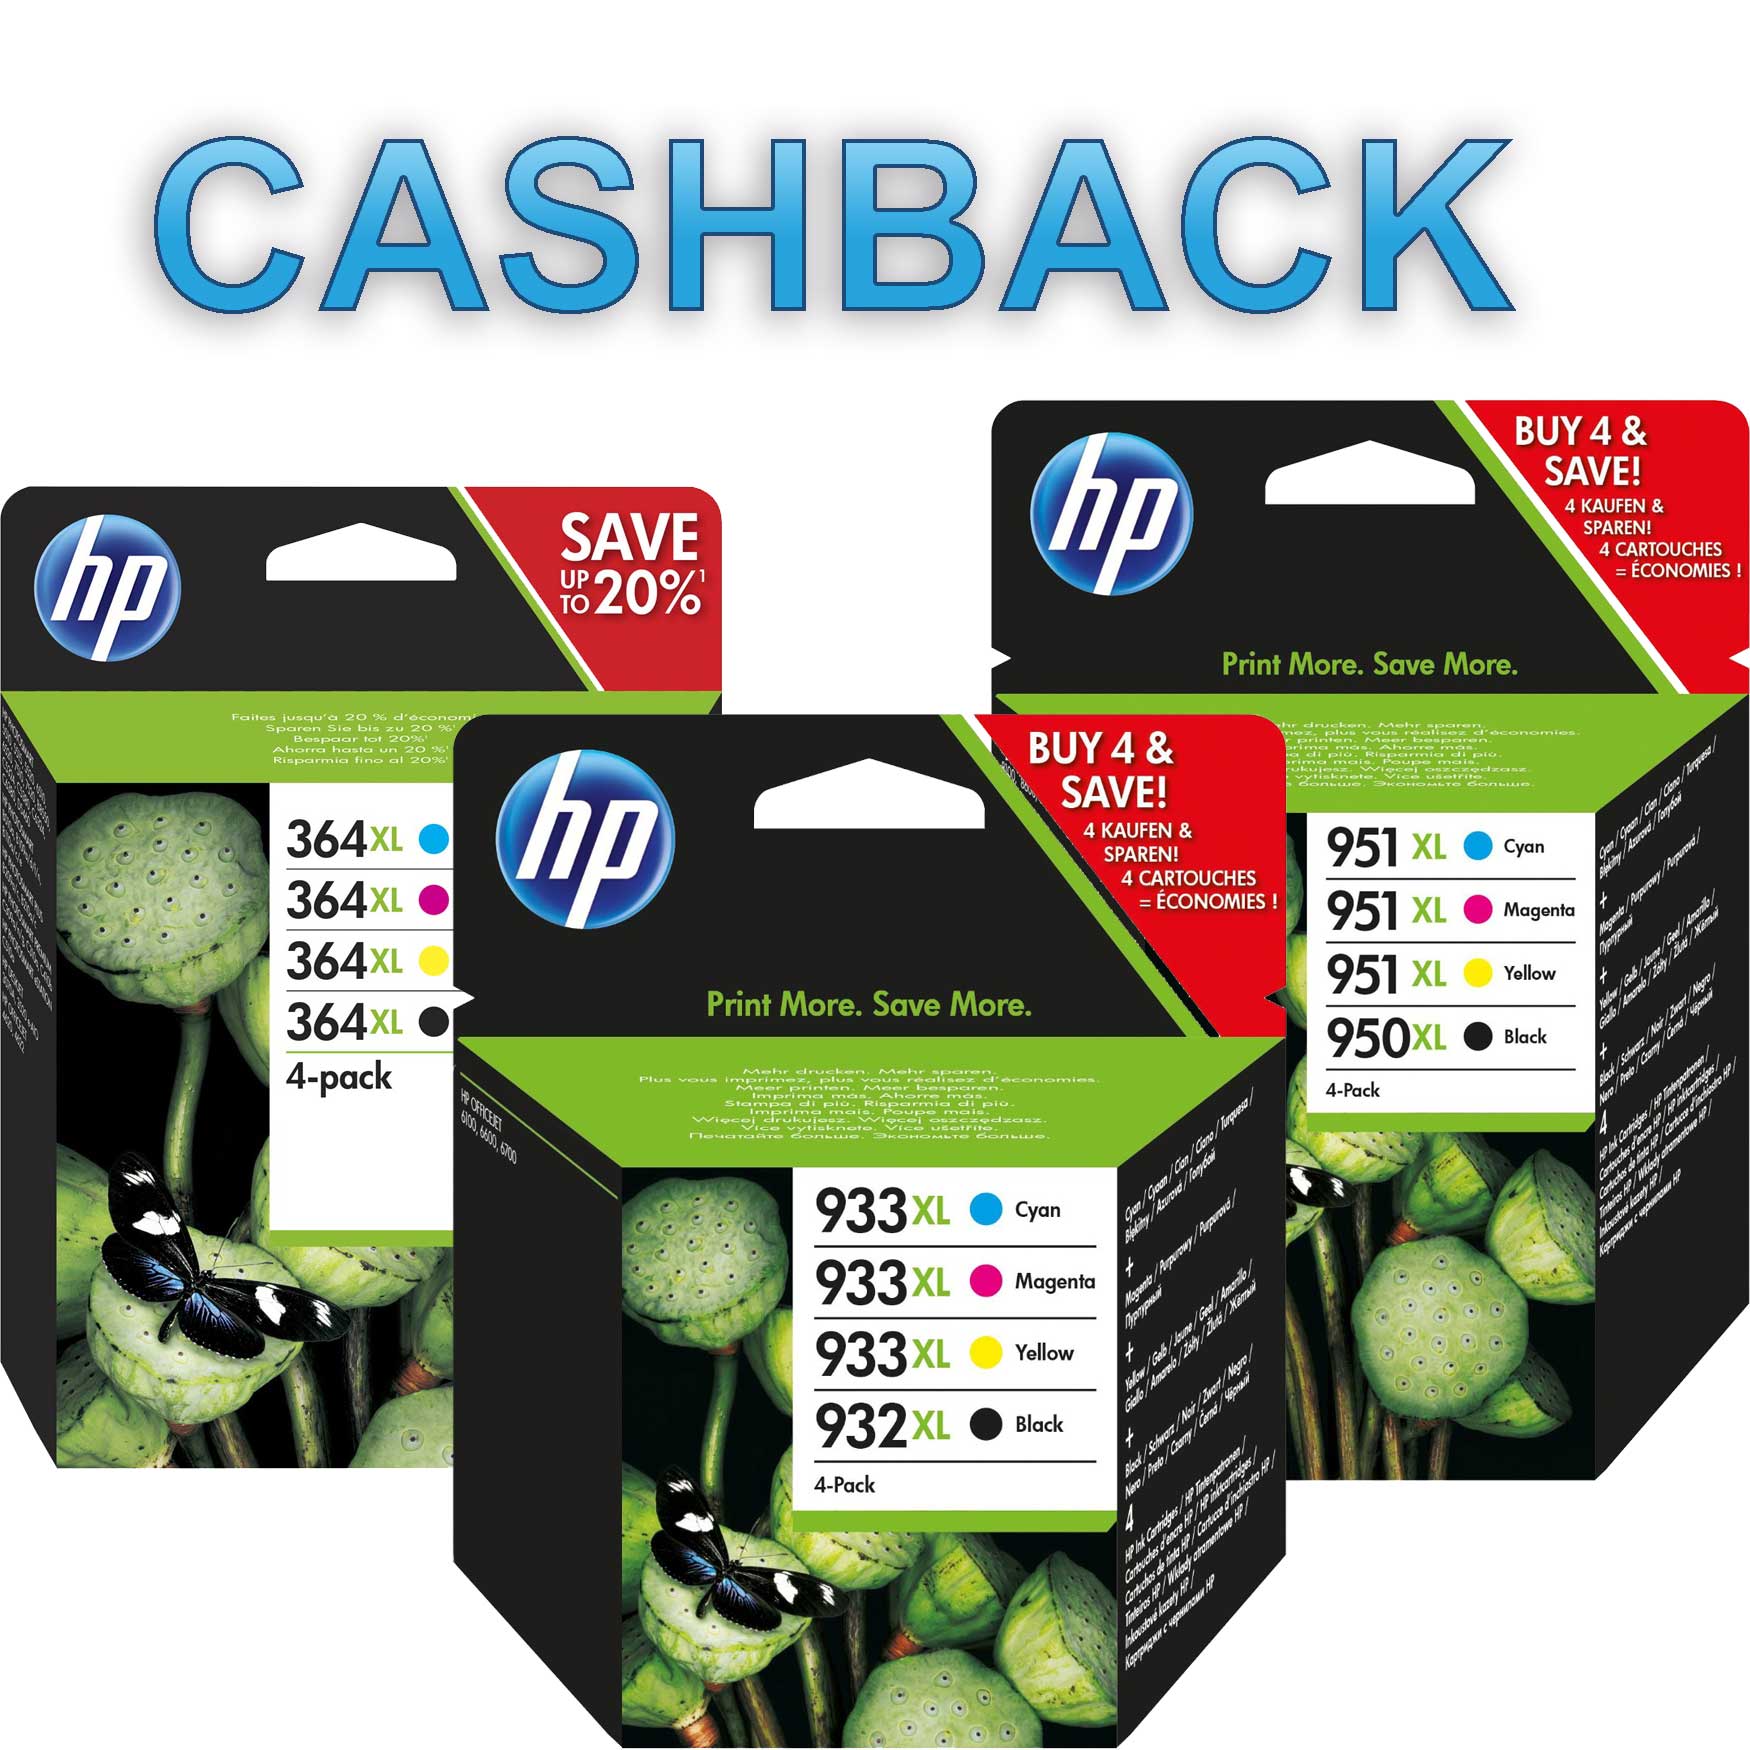 HP Druckerpatronen Cashback